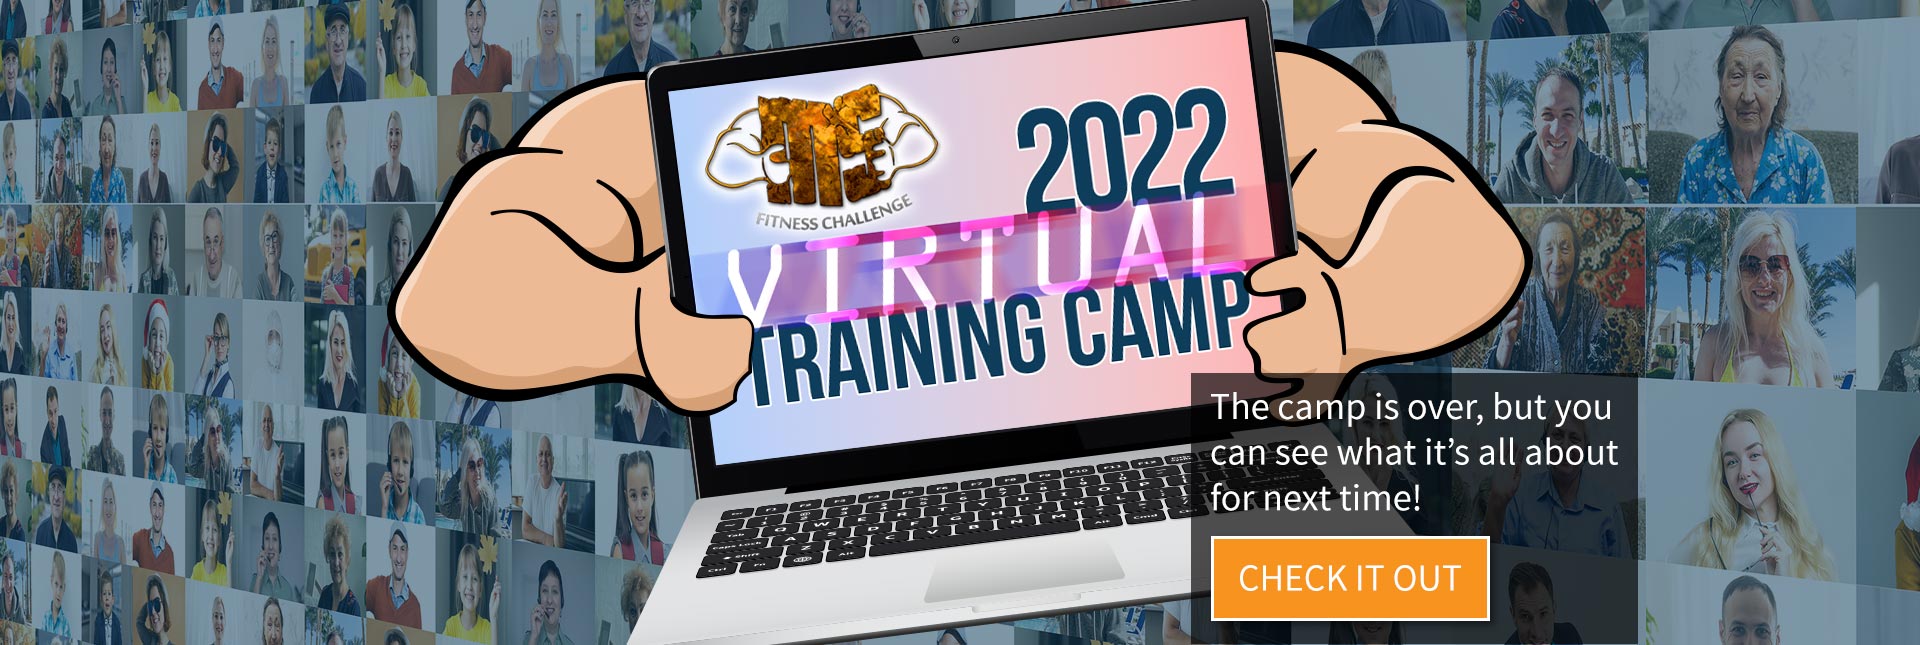 Virtual Training Camp 2022